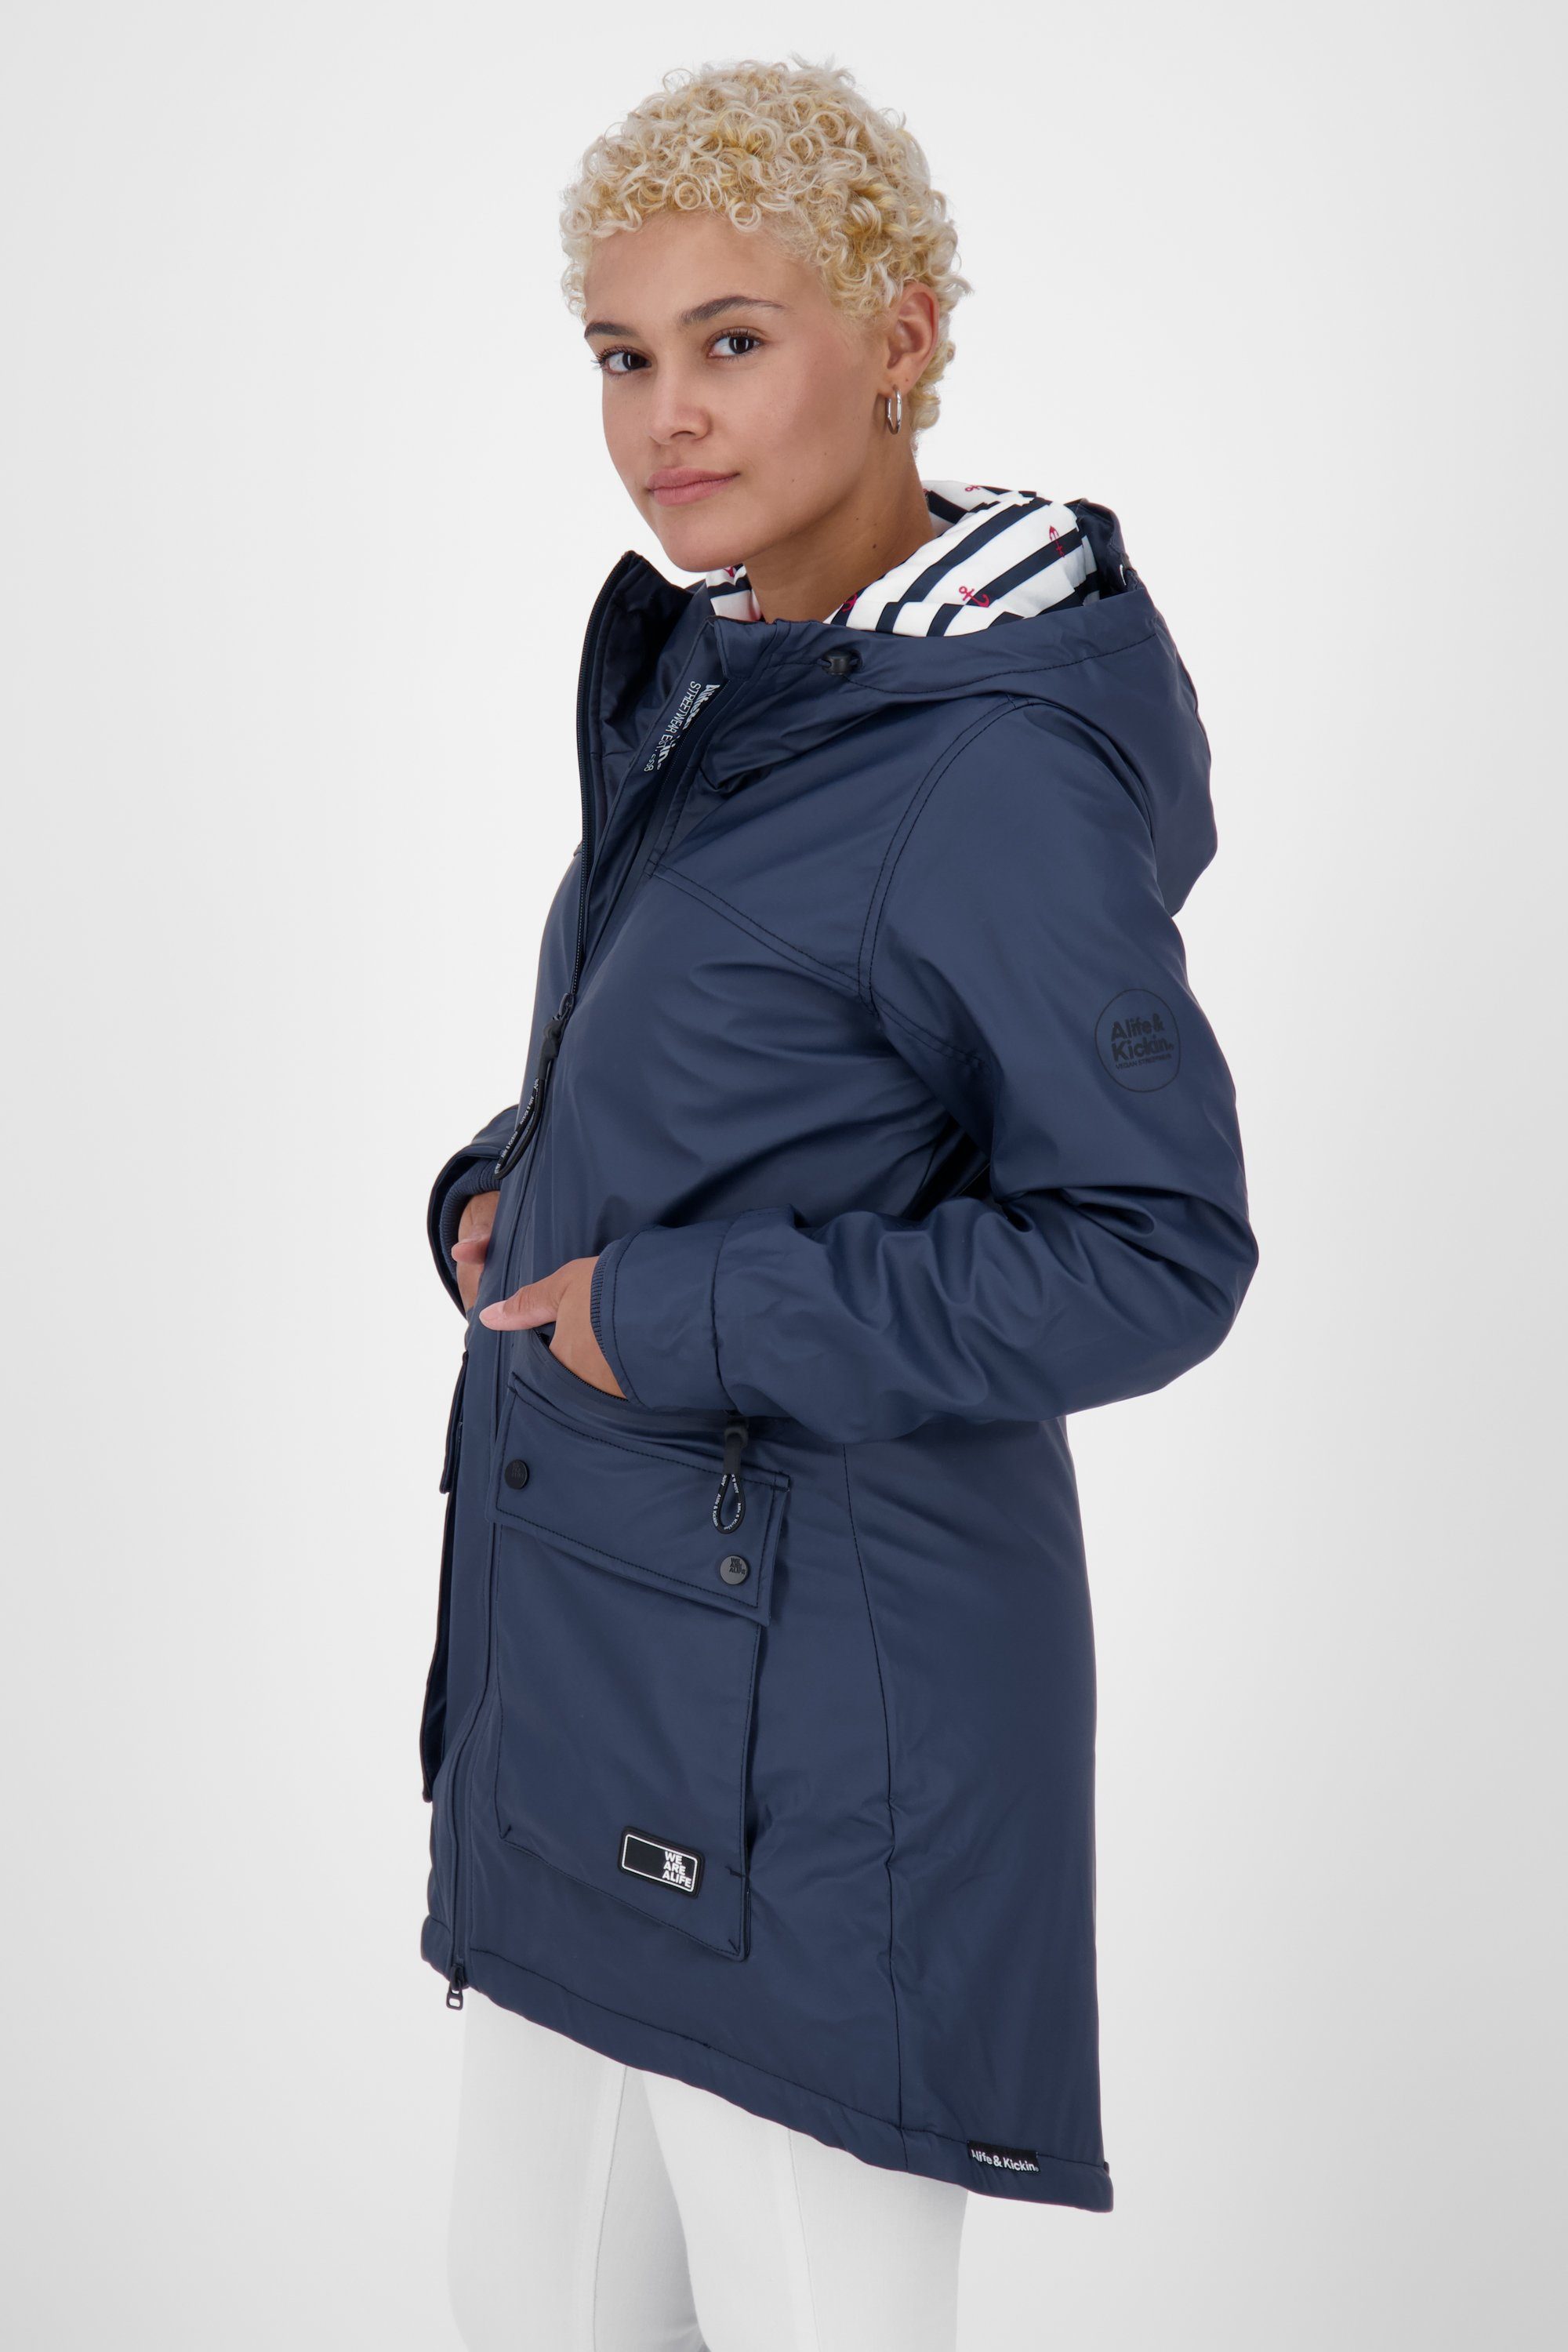 Alife & AudreyAK Übergangsjacke Rainstyle marine A Damen Kickin Coat Langjacke, Langjacke